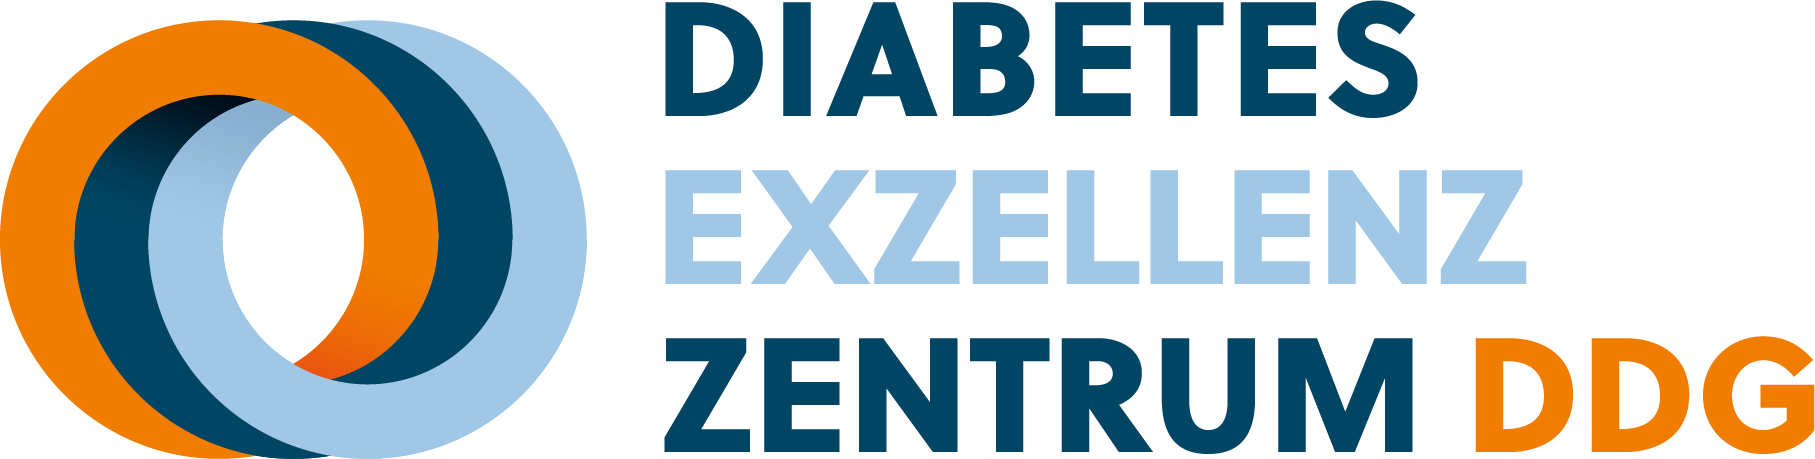 Diabetes Exzellenzzentrum